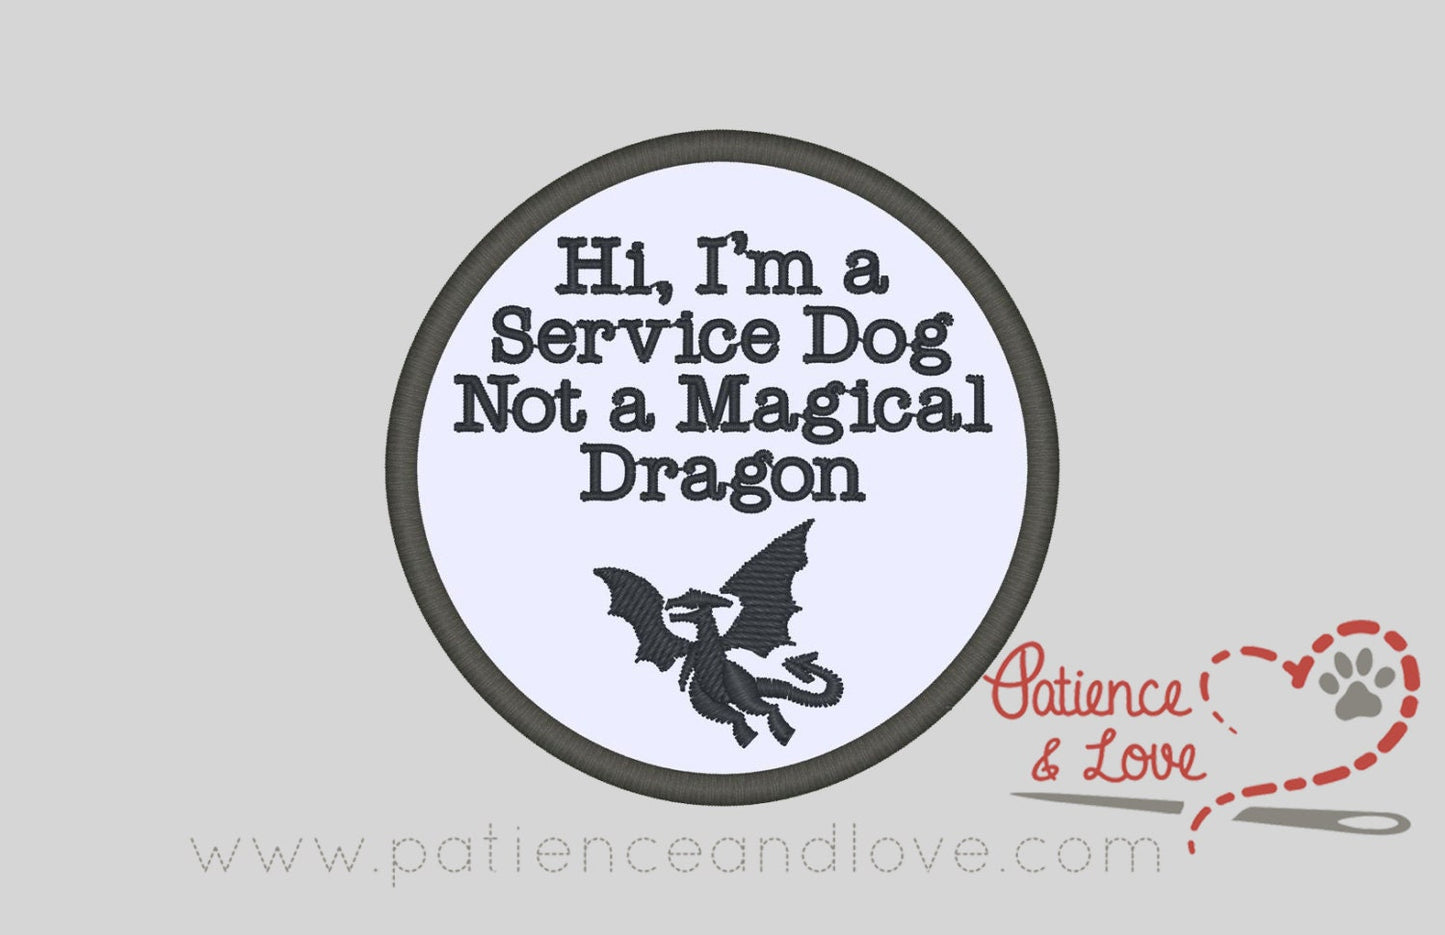 Hi, I'm a Service dog Not a Magical Dragon, 3-inch round patch